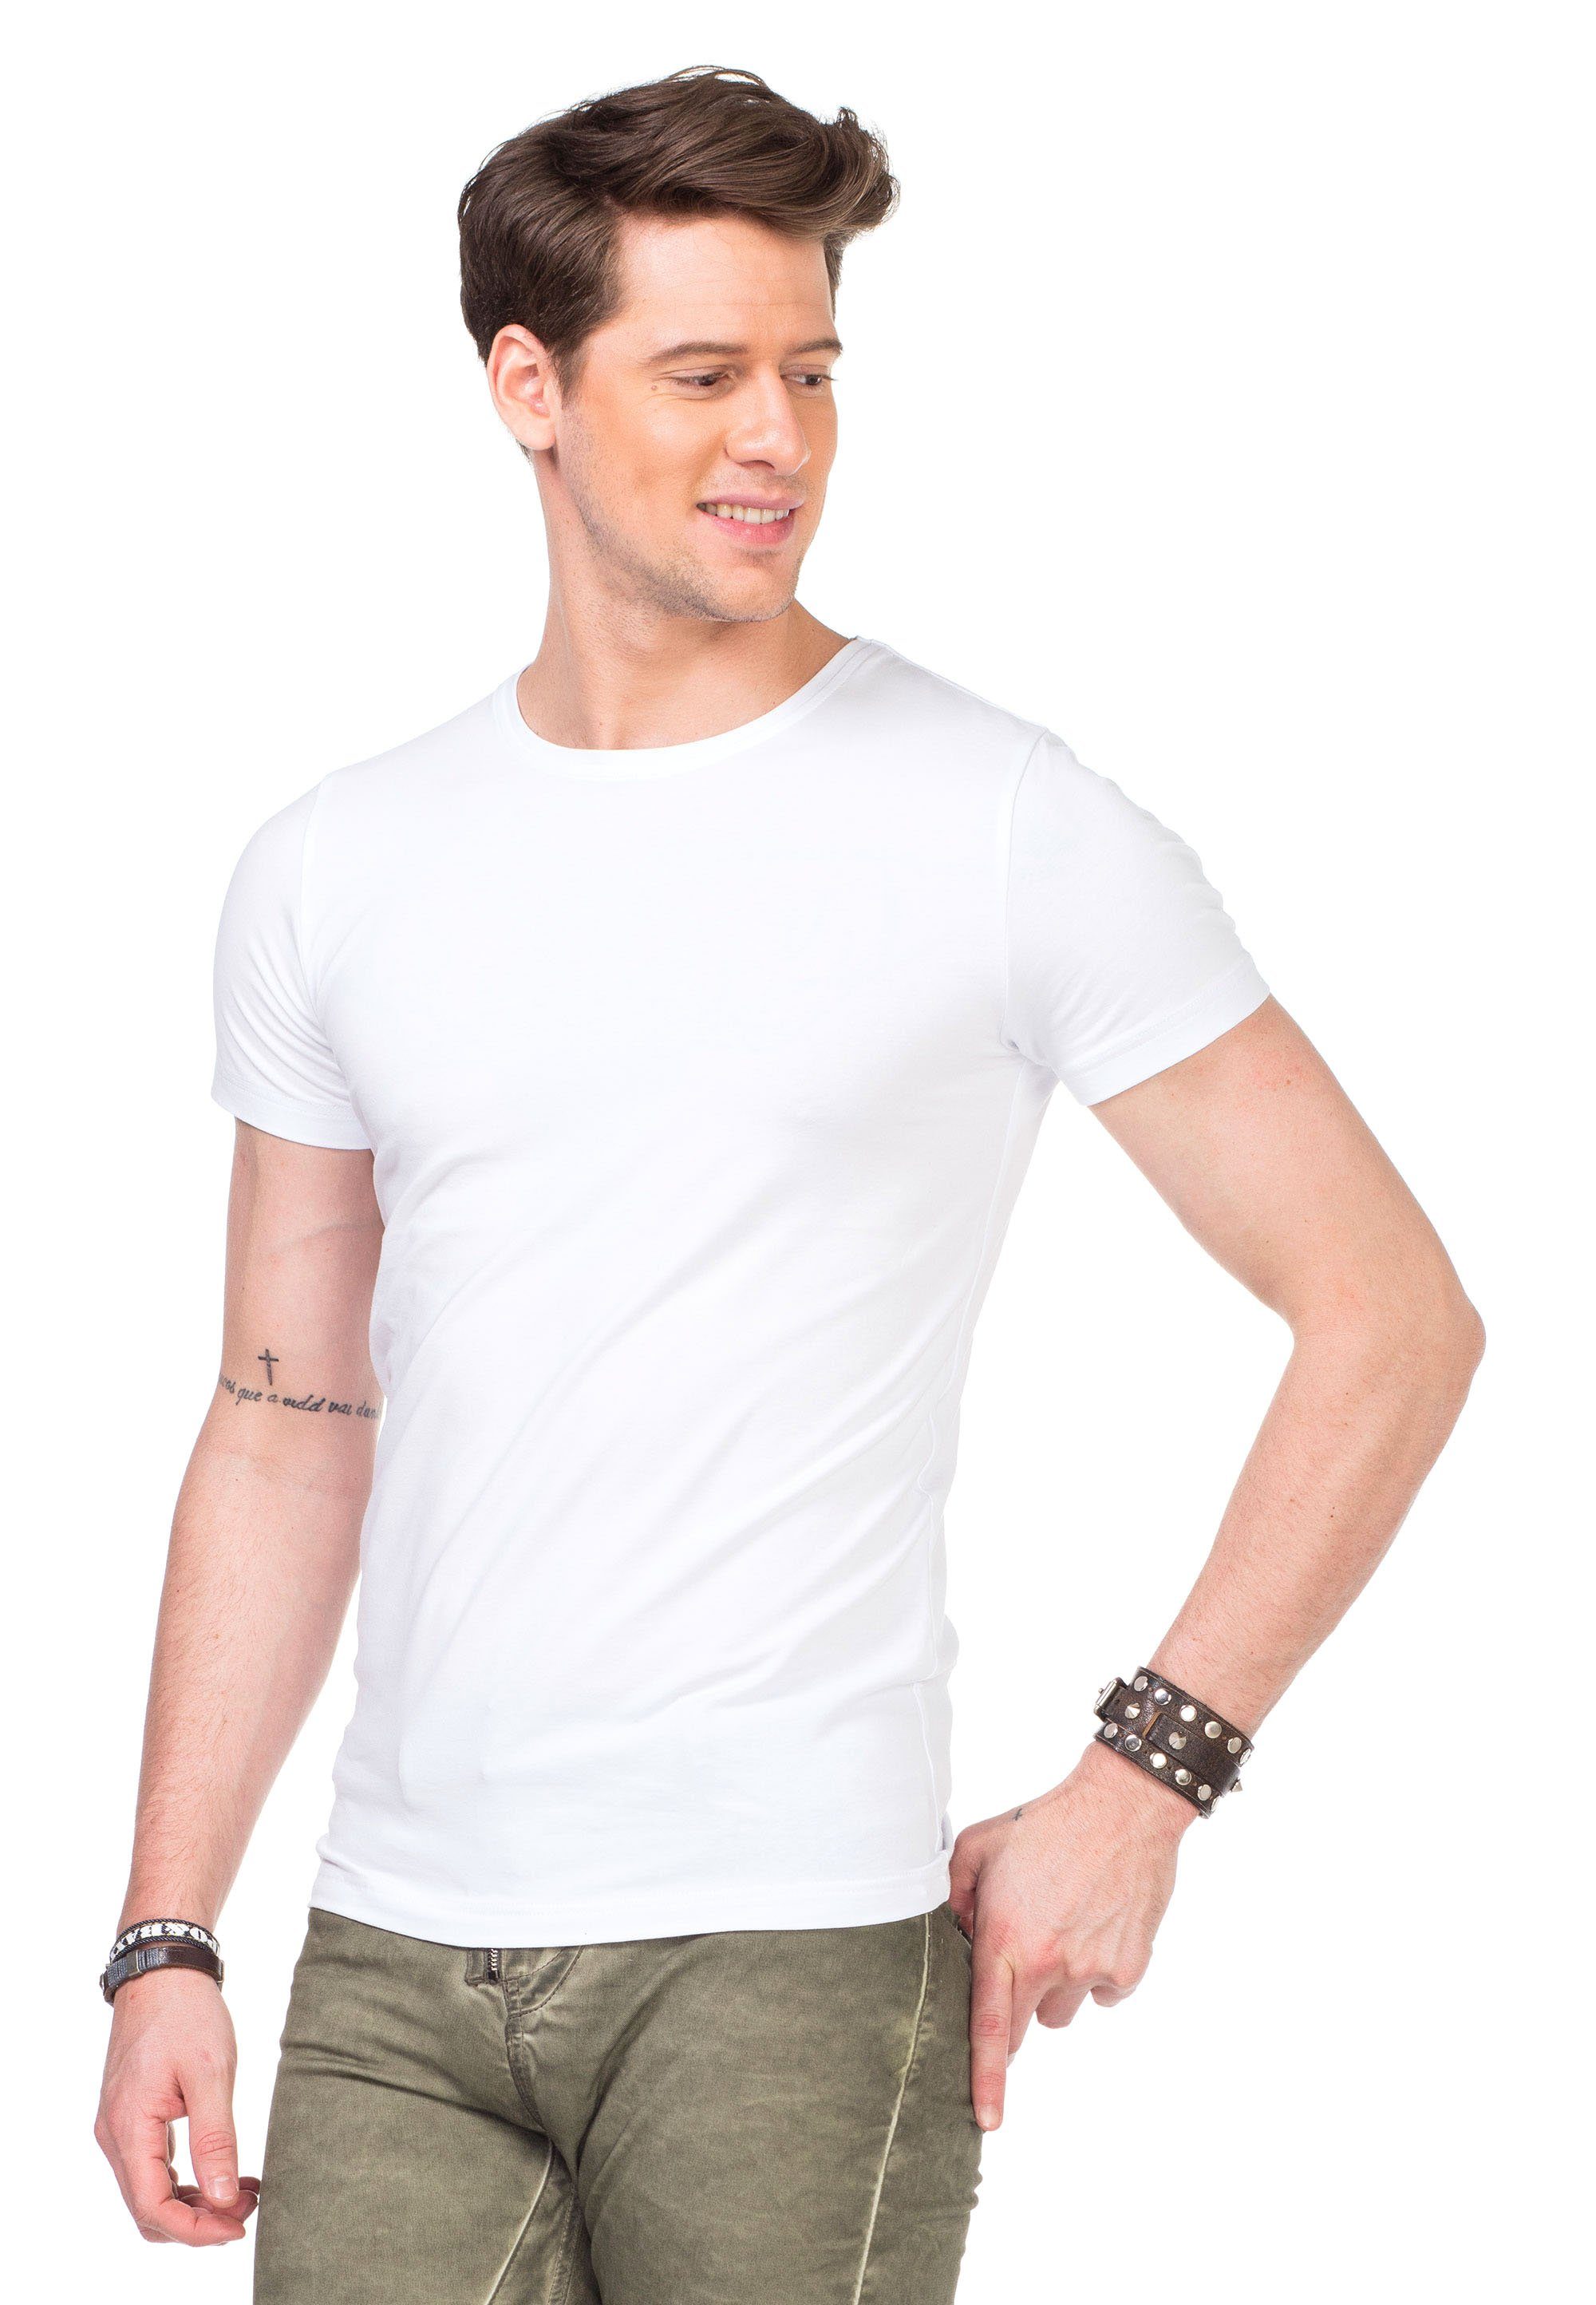 Rundhalsausschnitt Cipo T-Shirt weiß & modernem Baxx mit